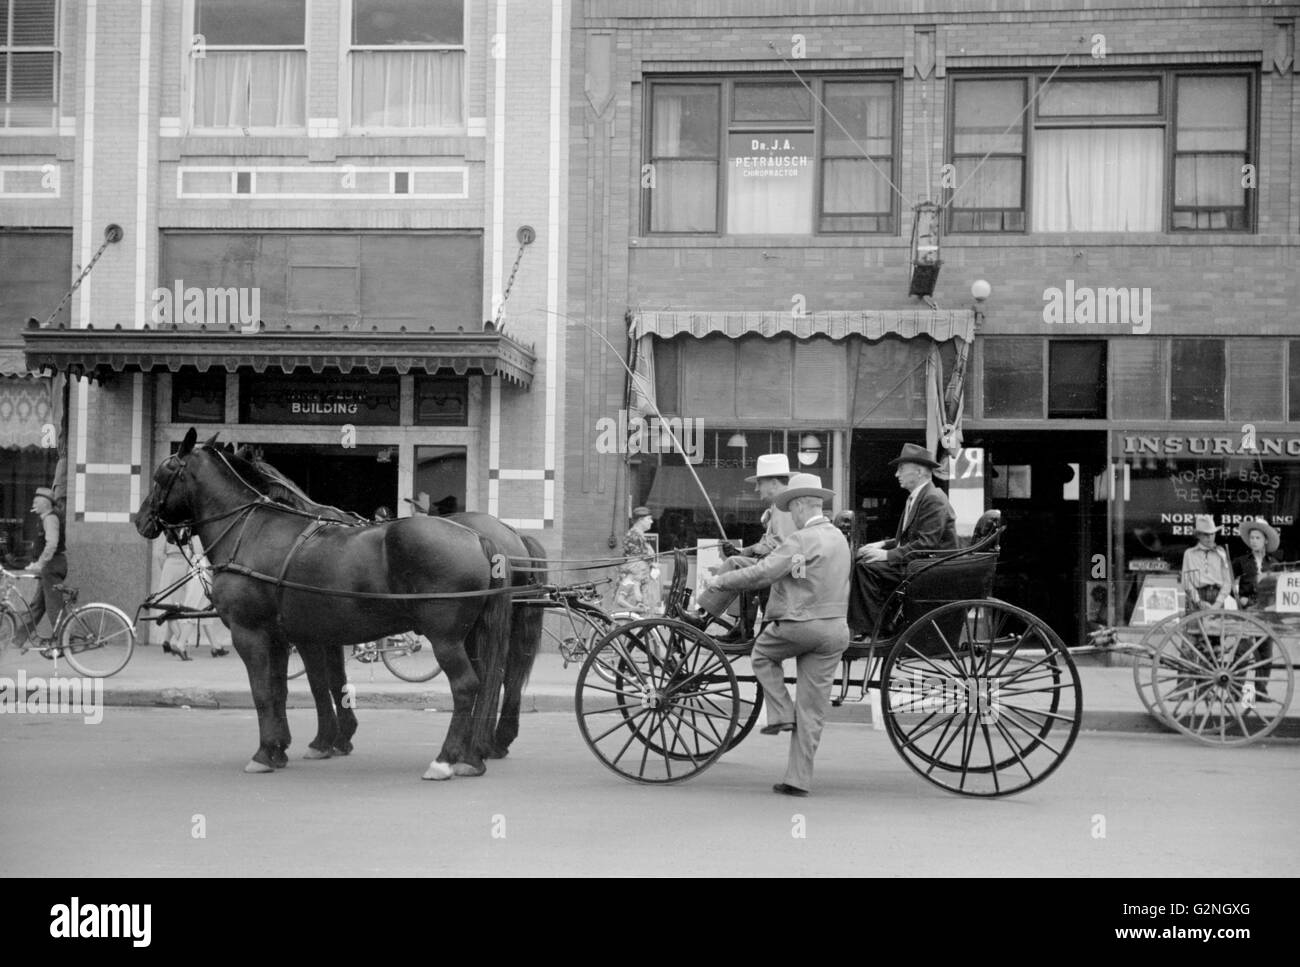 Horse and Buggy on a Main Street,Billings,Montana,USA,Arthur Rothstein for Farm Security Administration (FSA),August 1939 Stock Photo